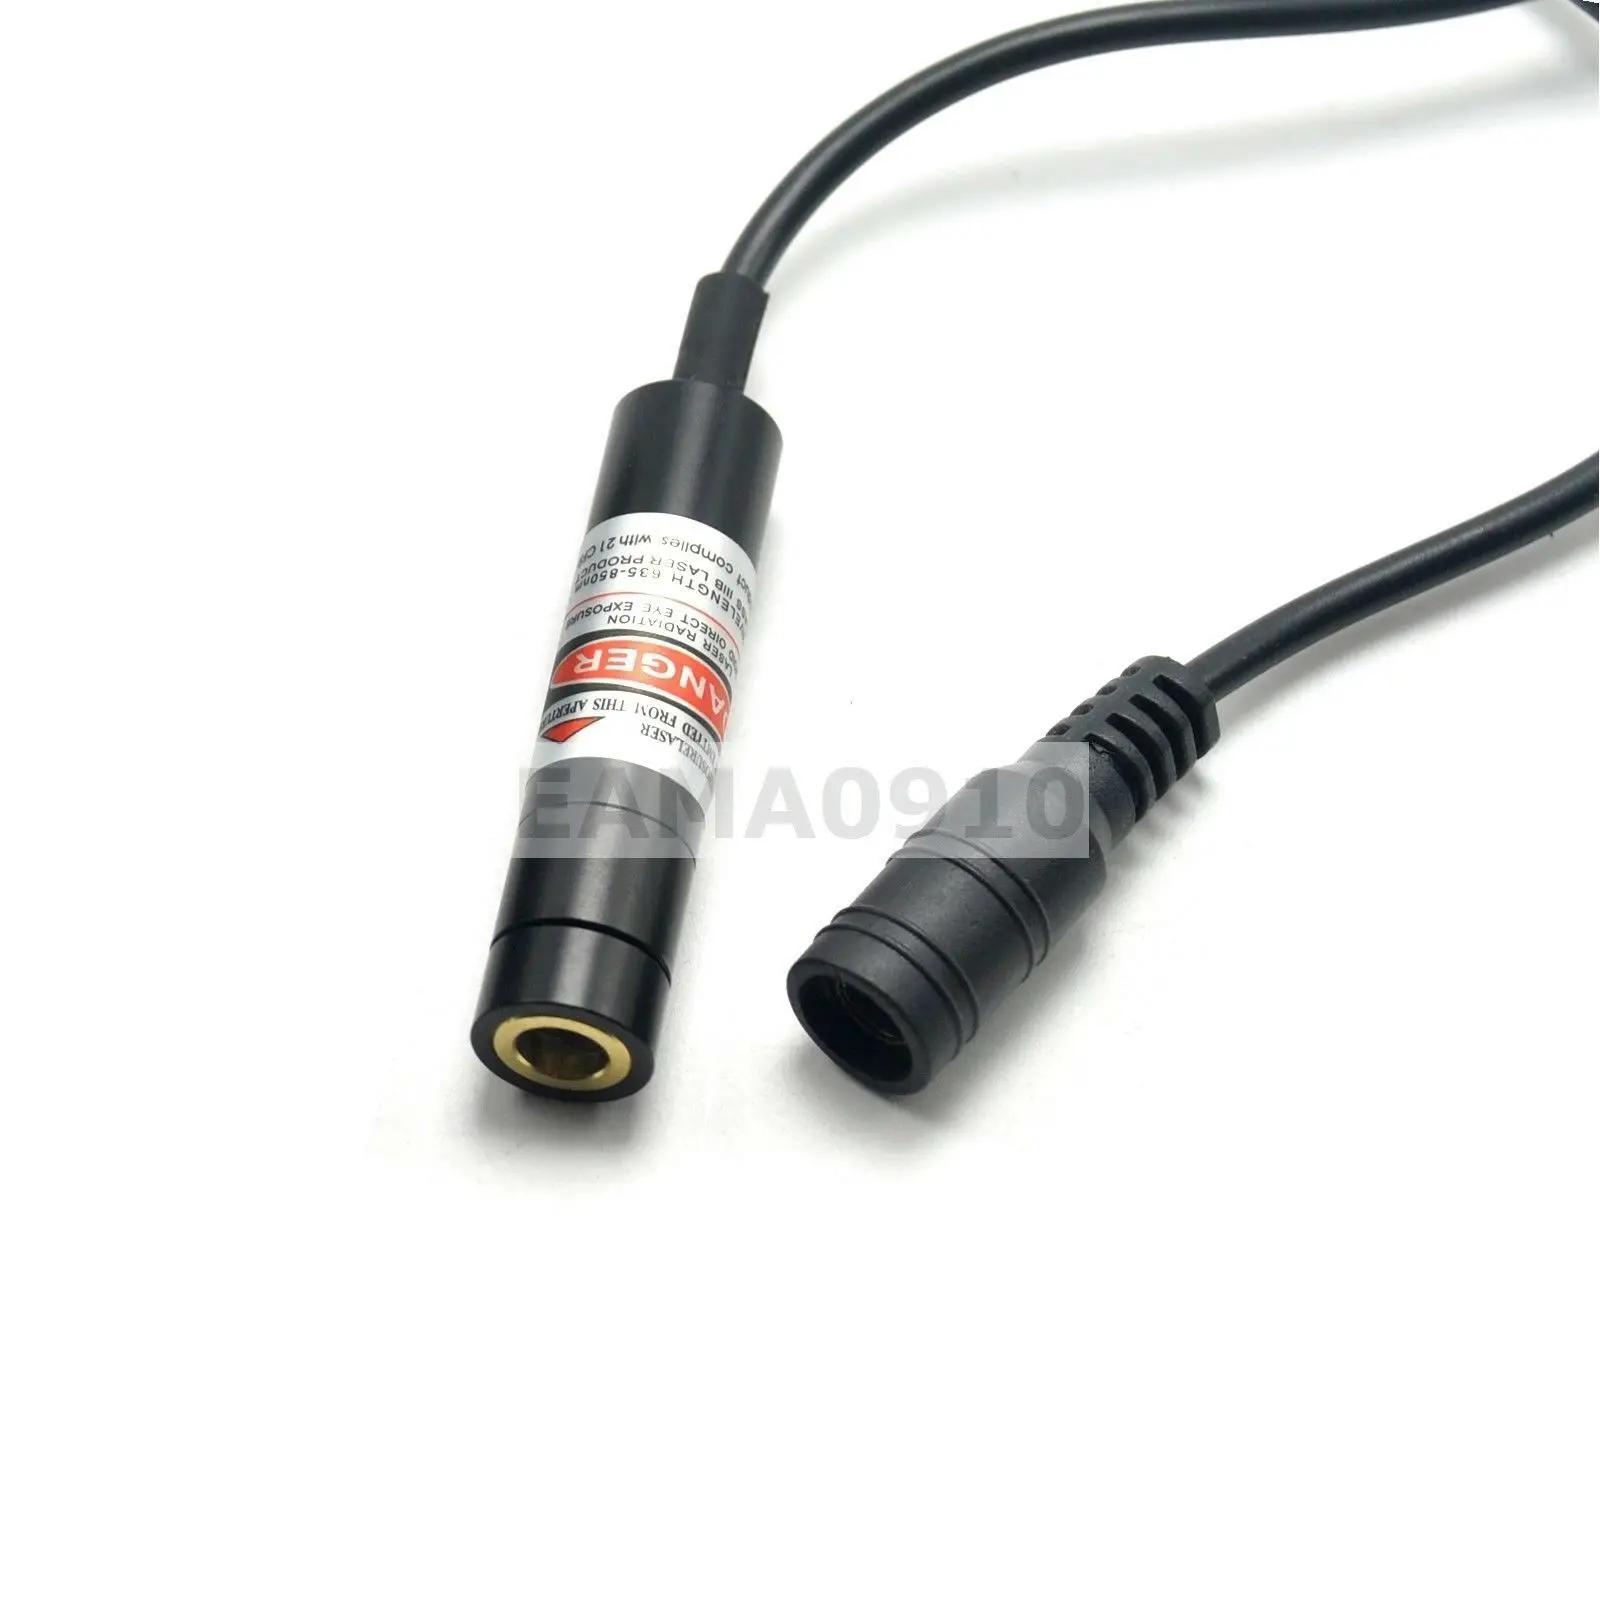 Focusable 20MW Chấm Đỏ Đèn Laser Laser Diode Module 650nm 12X55Mm W/Adapter